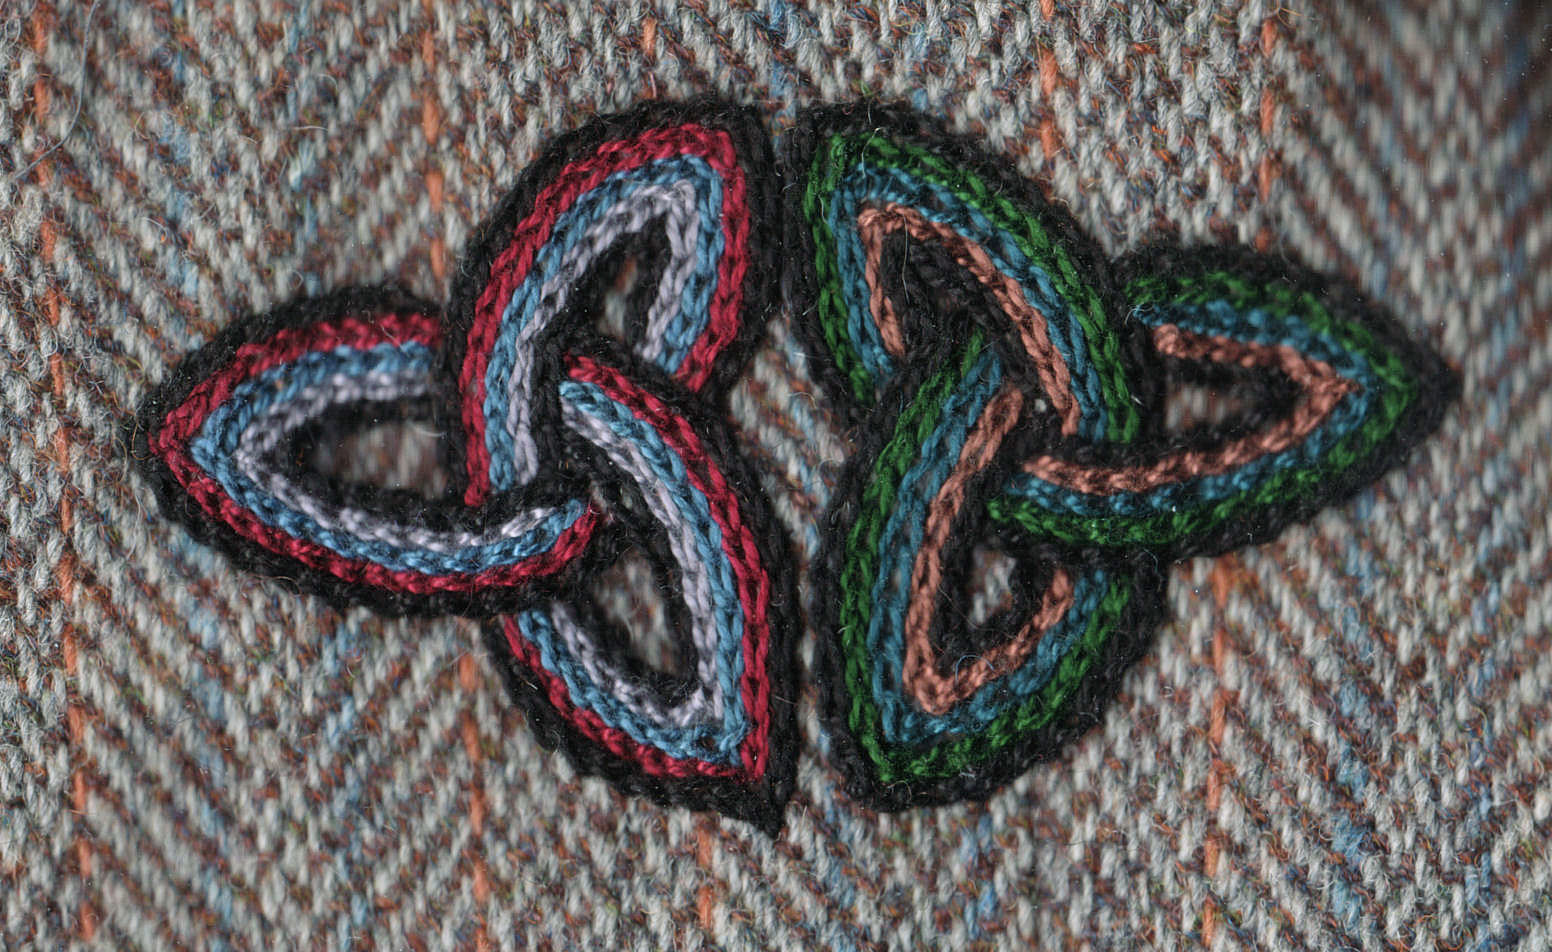 Pimp Stitch : Embroidery